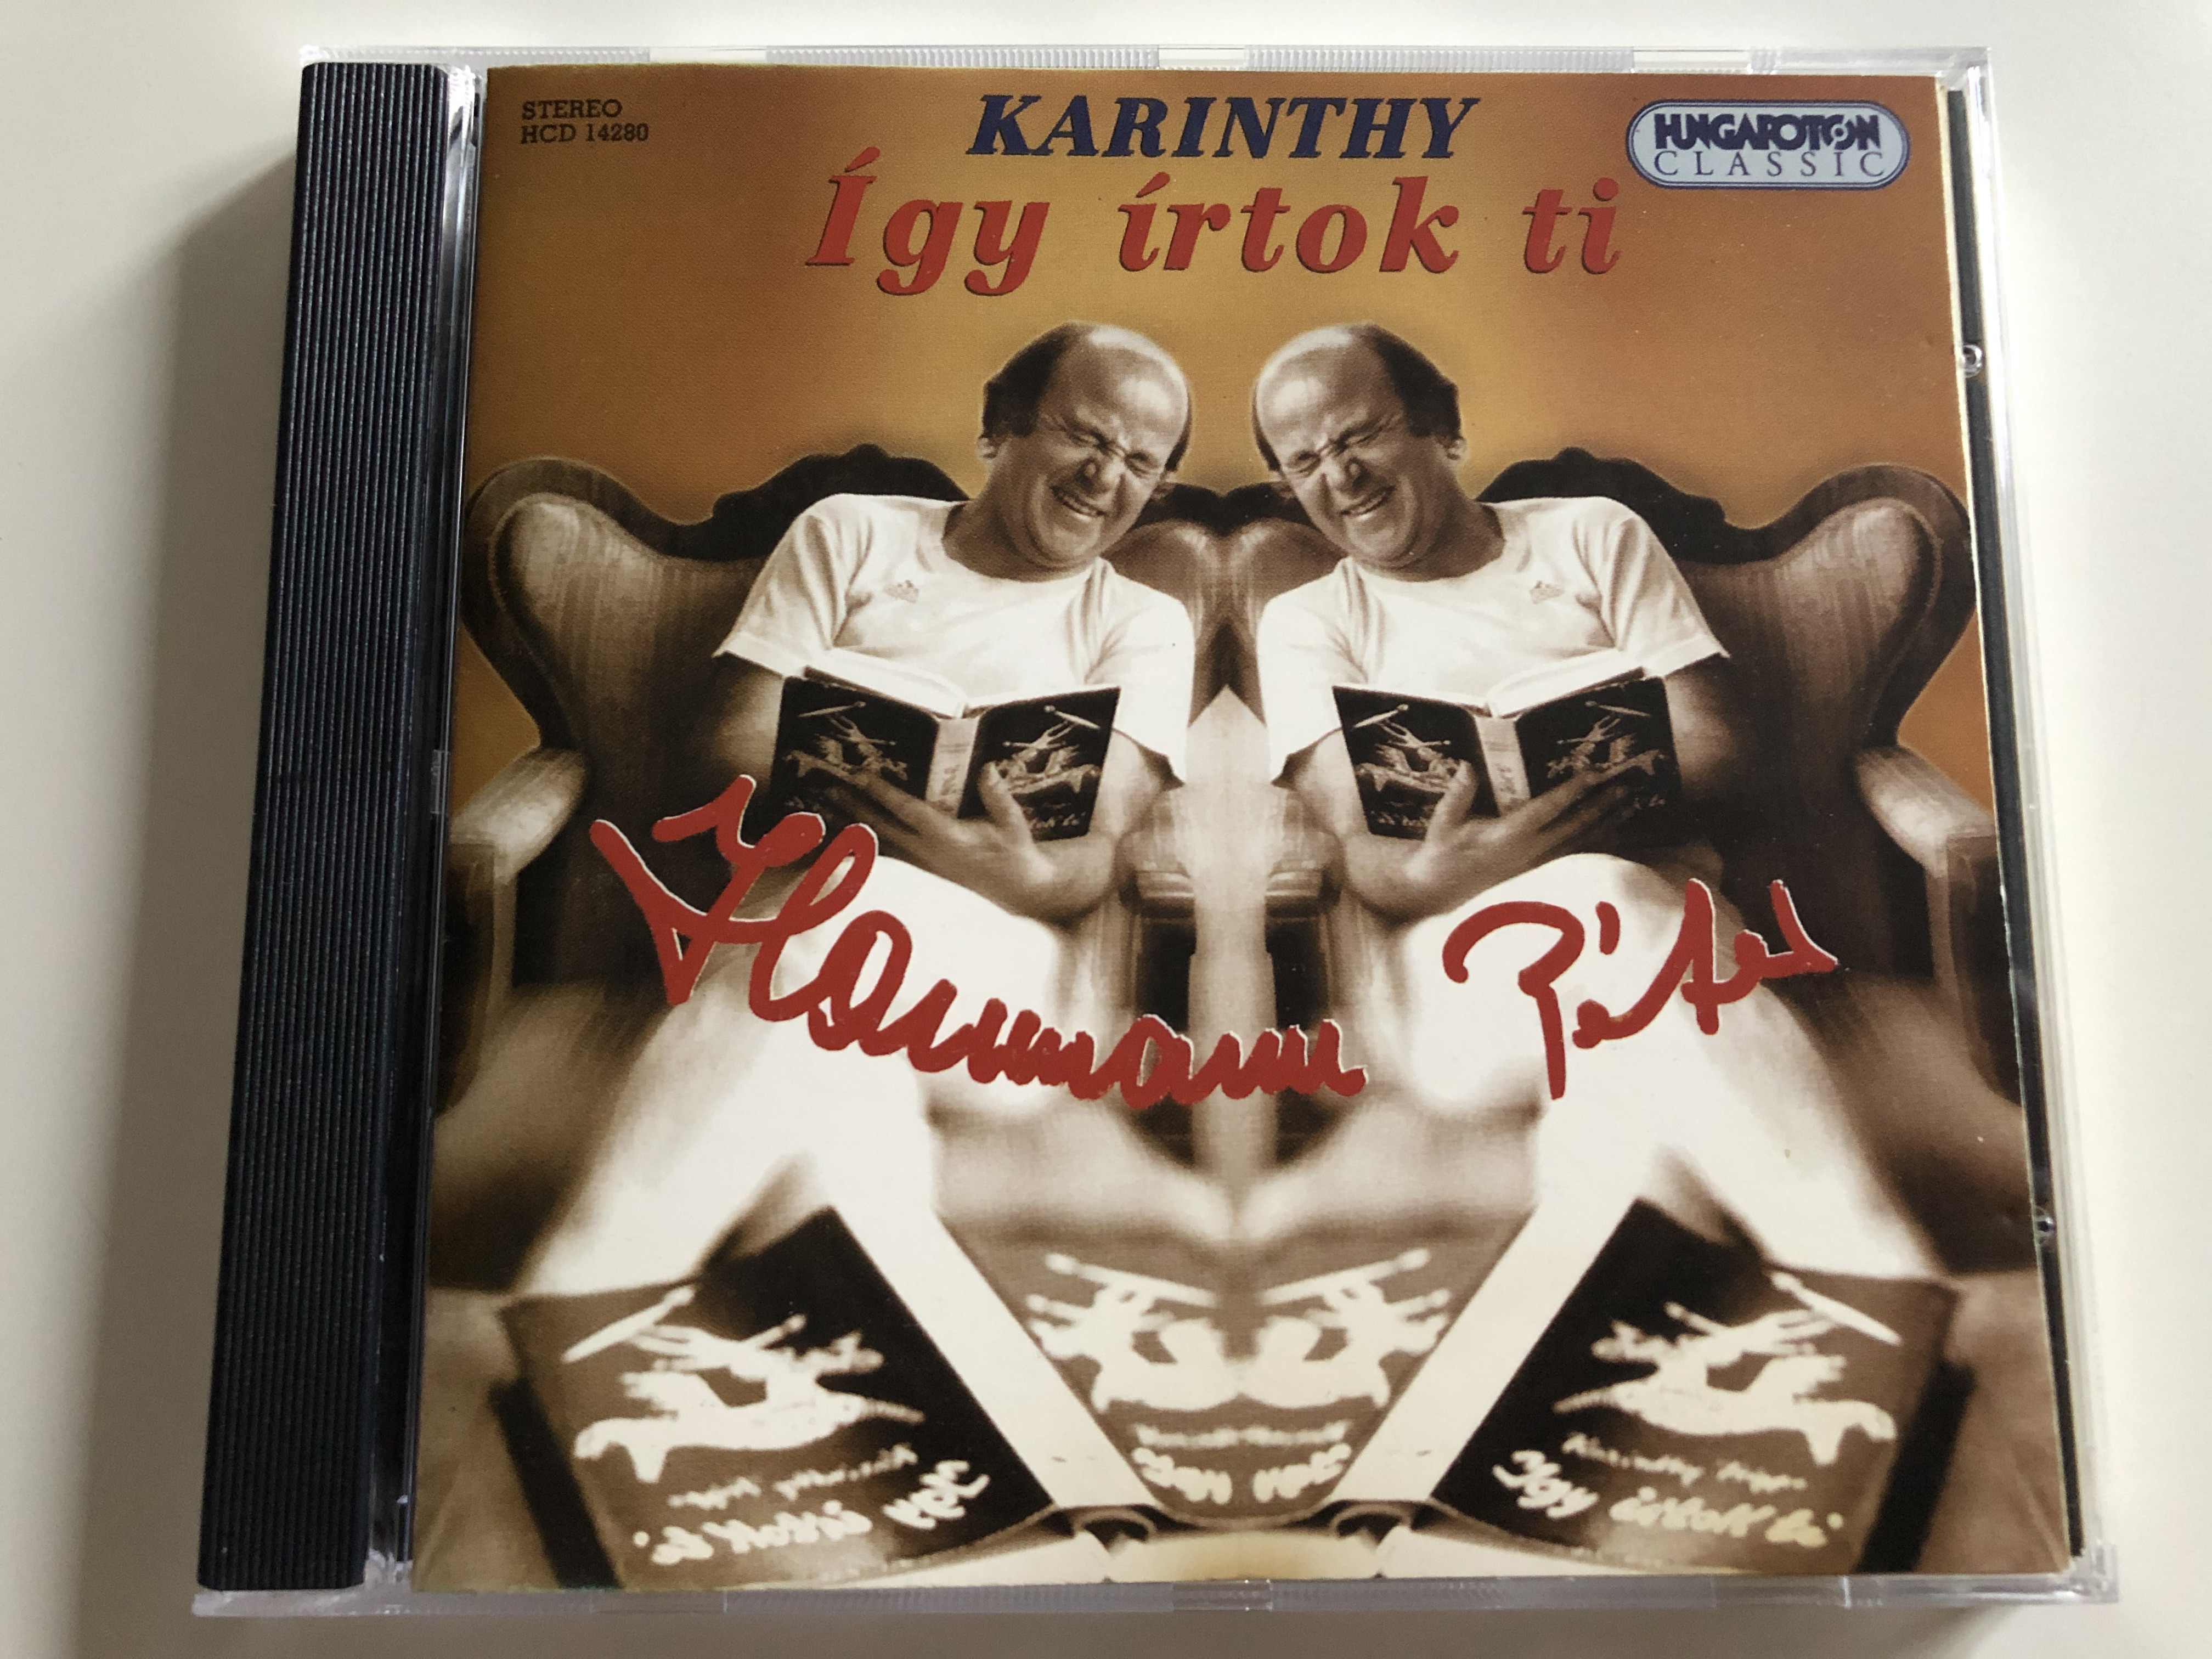 karinthy-gy-rtok-ti-el-adja-haumann-p-ter-ady-t-th-rp-d-babits-kosztol-nyi-j-zsef-attila-illy-s-gyula-kr-dy-m-ricz-zsigmond-hungarian-novels-and-drama-works-read-by-p-ter-haumann-hungaroton-audio-cd-1999-hcd-1-1-.jpg